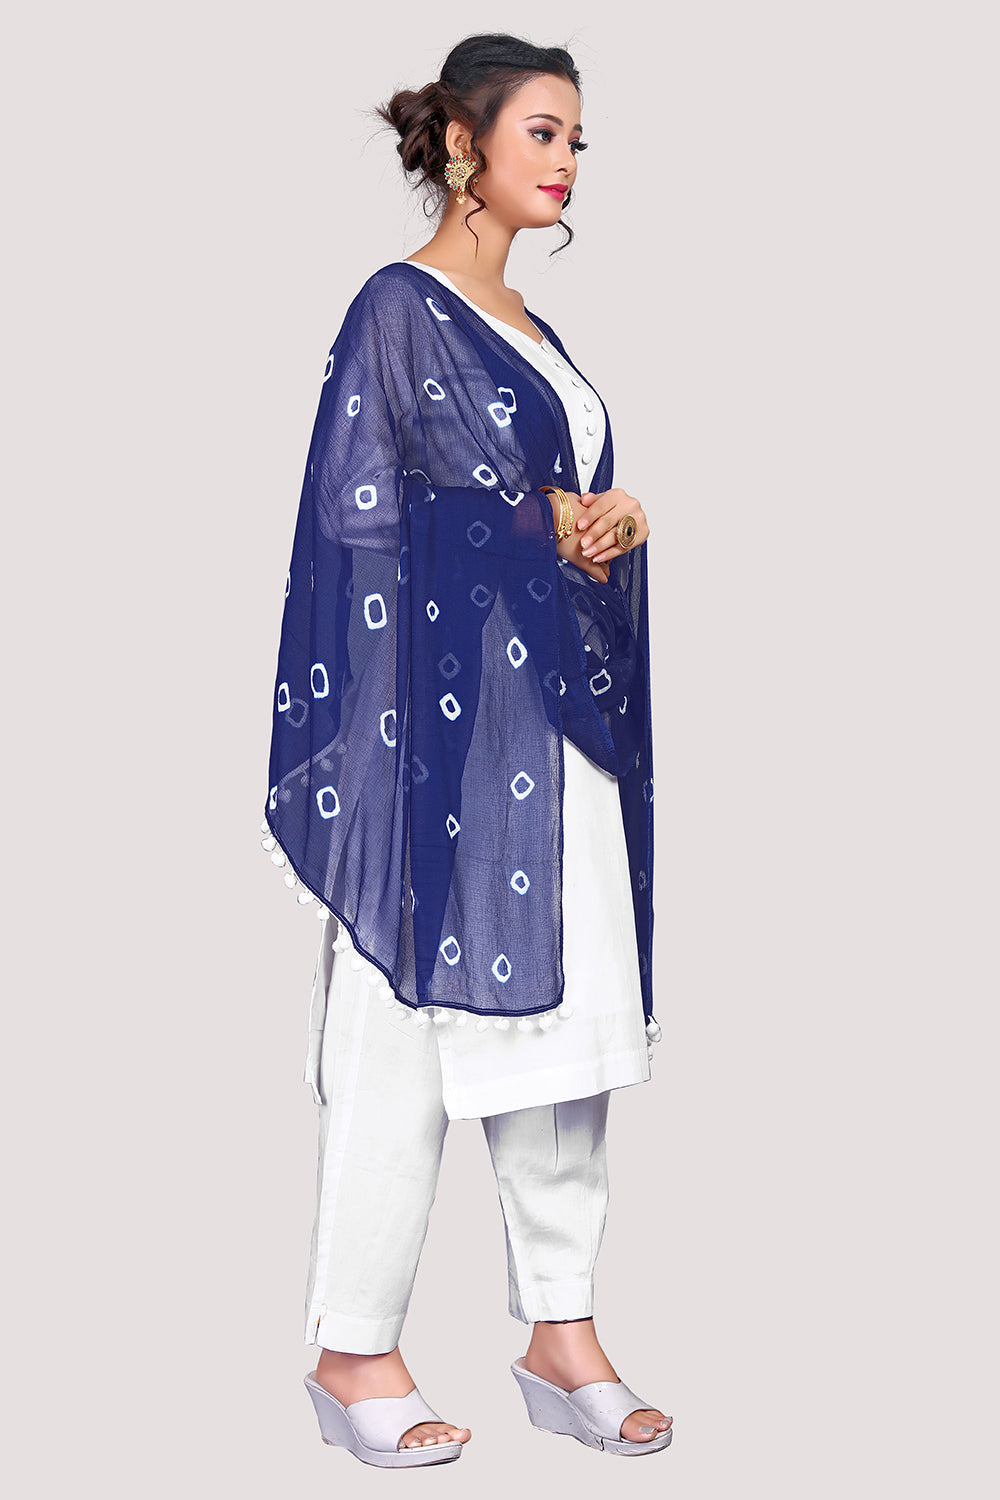 Women's Royal Blue  Bandhani Print Woven Chiffon Dupatta  - NIMIDHYA